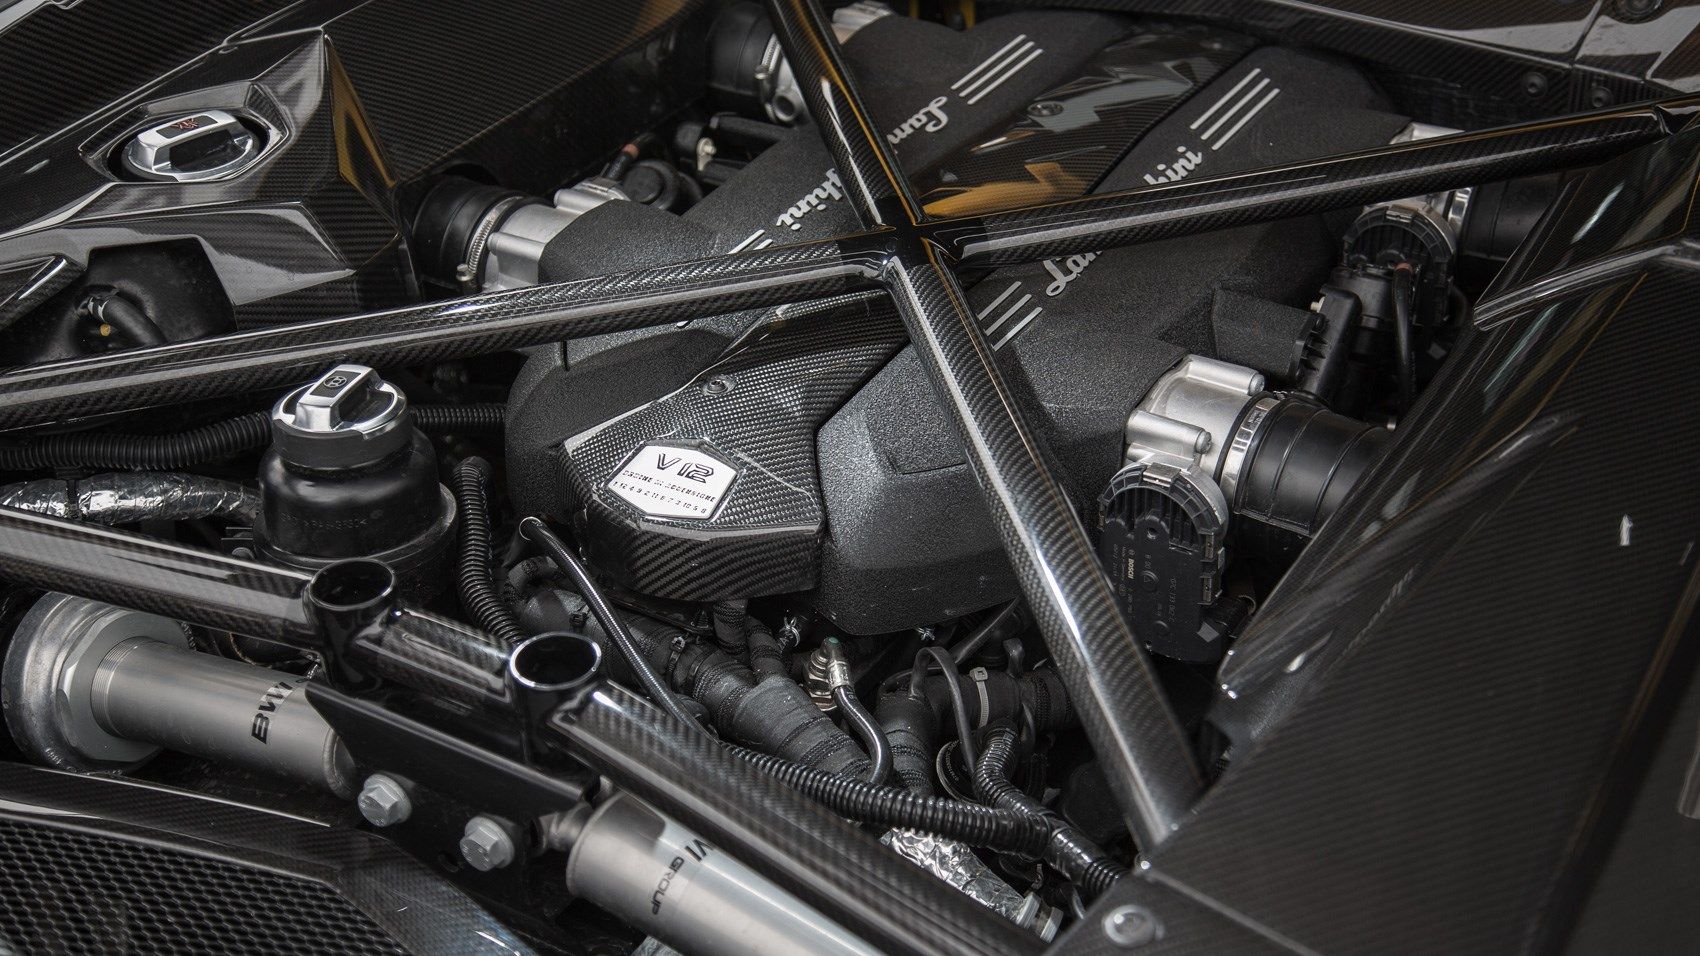 Lamborghini Aventador S engine